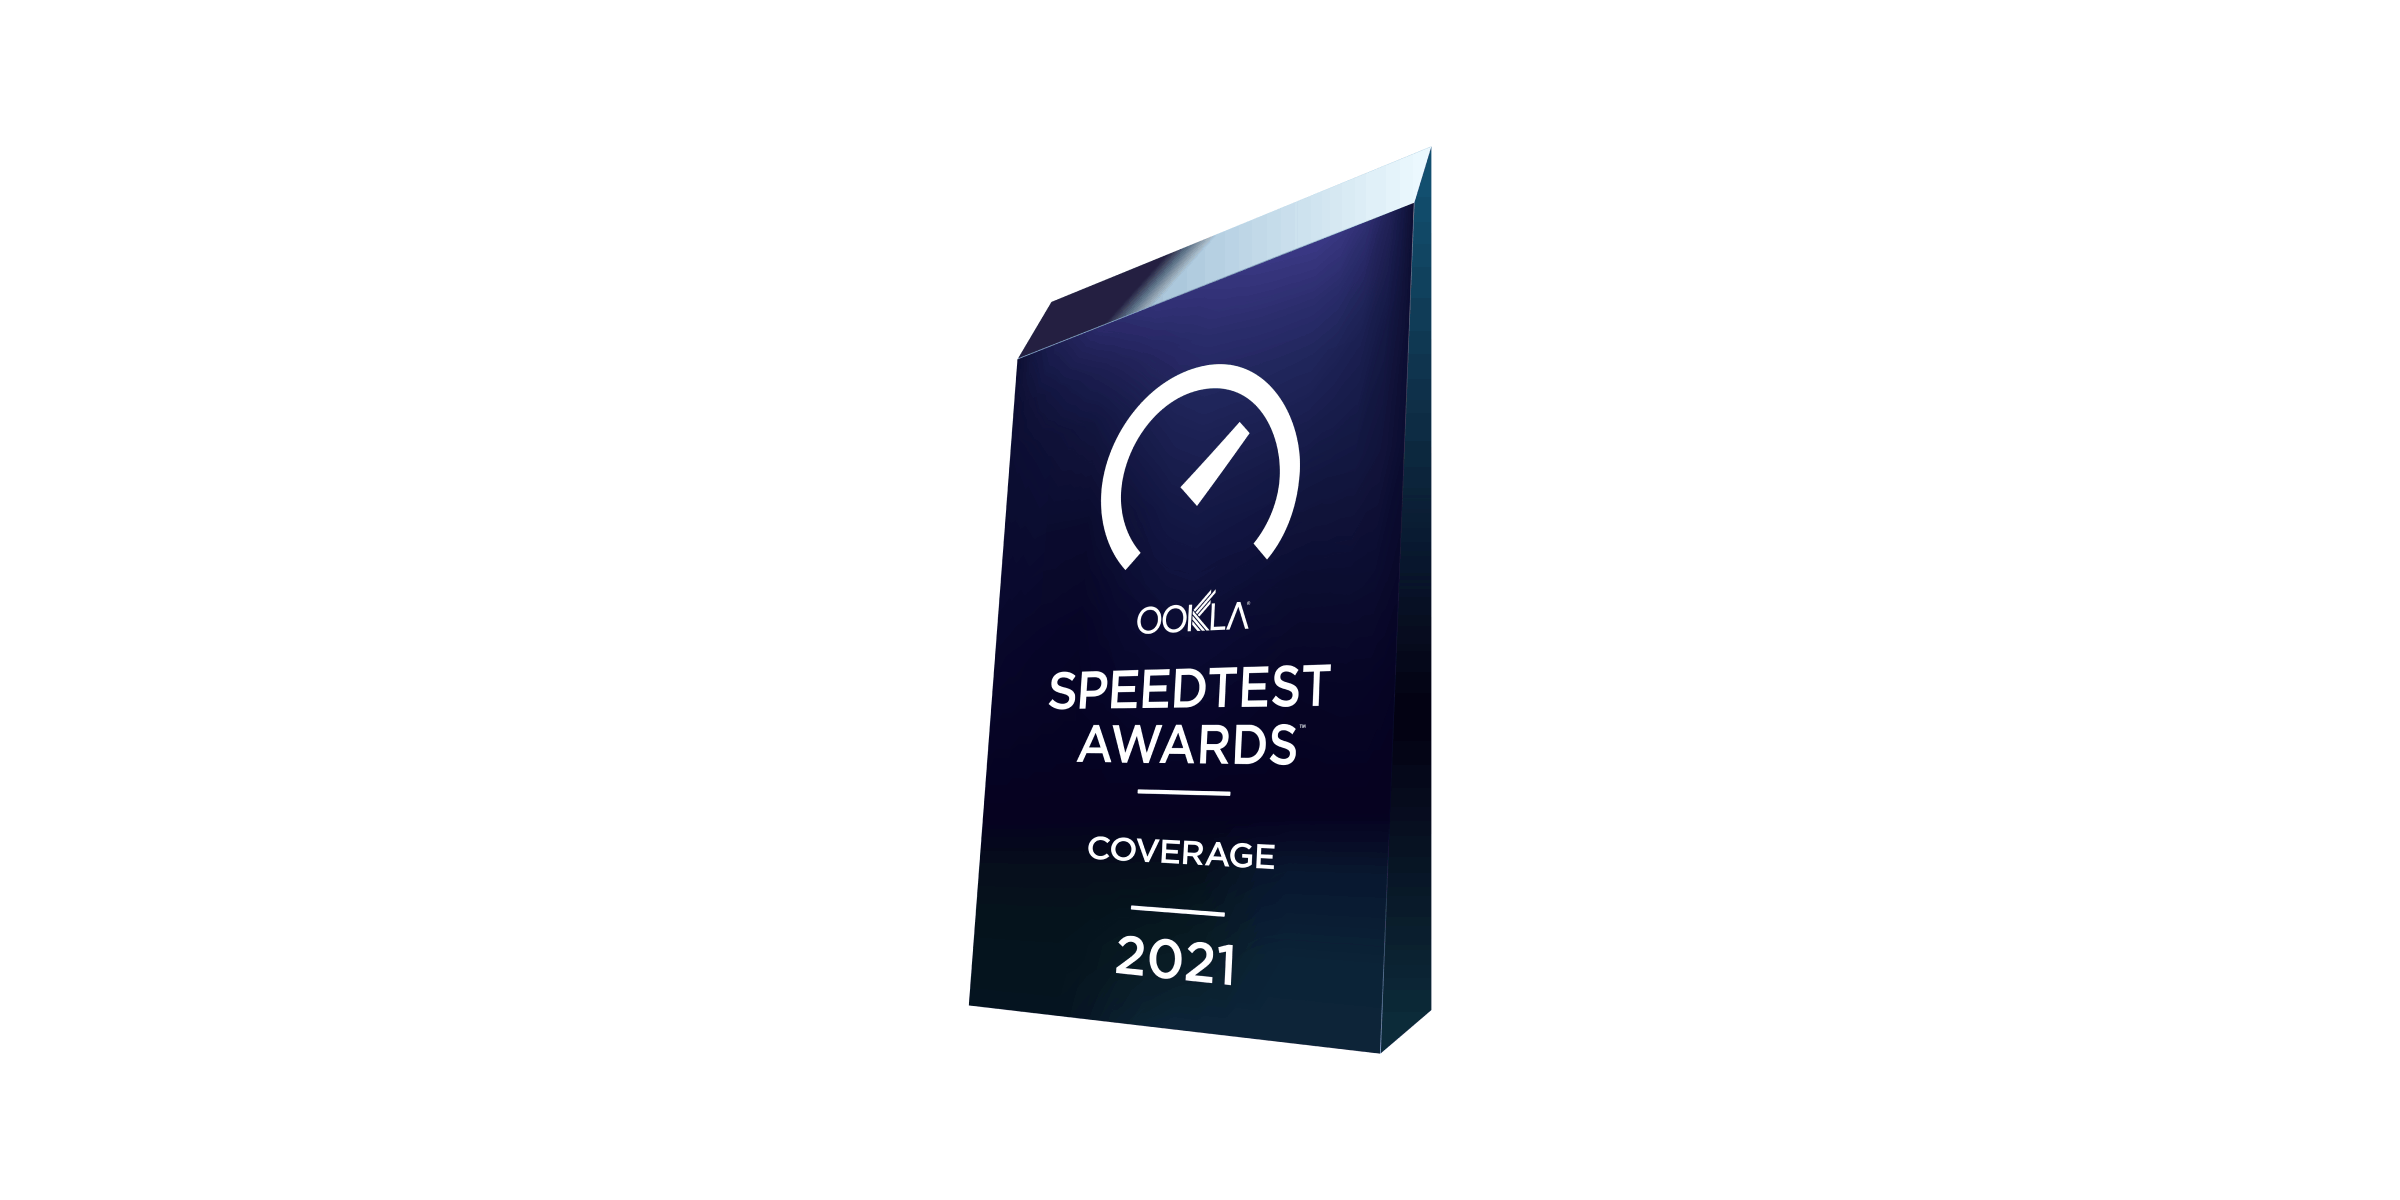 Speedtest awards coverage 2021